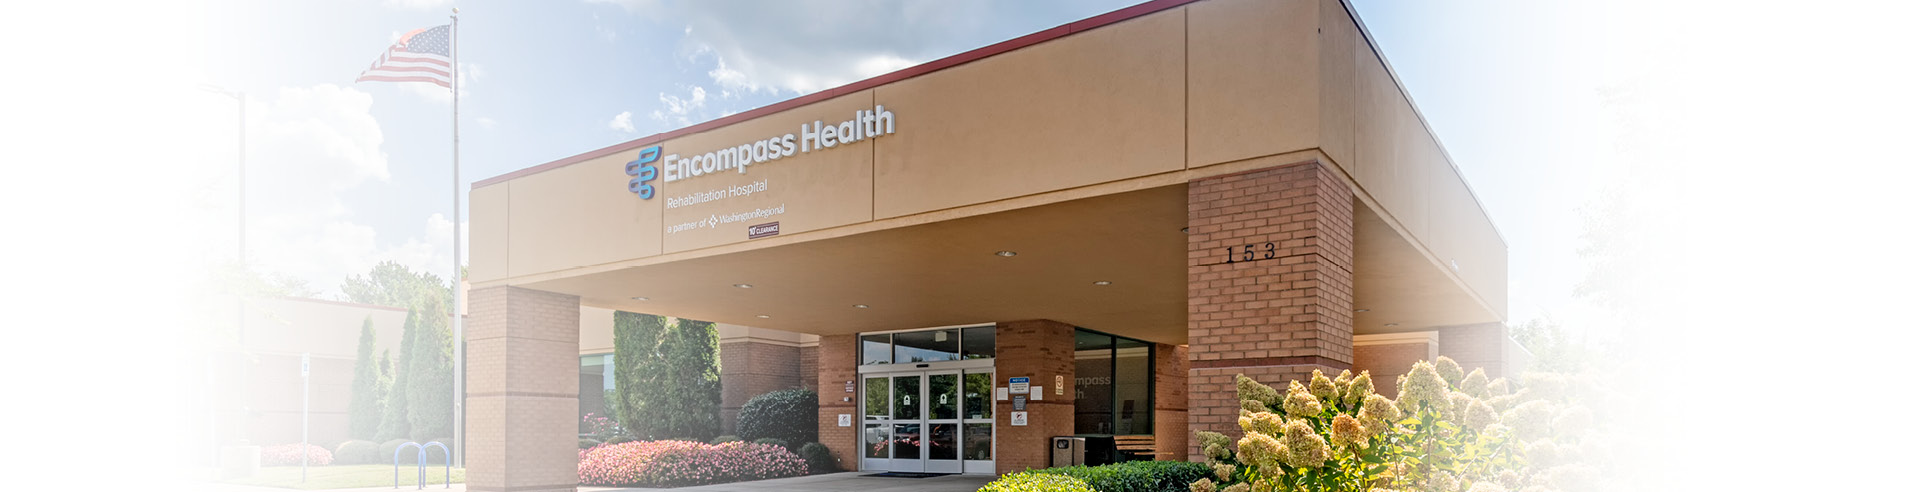 Encompass Health Rehabilitation Hospital exterior